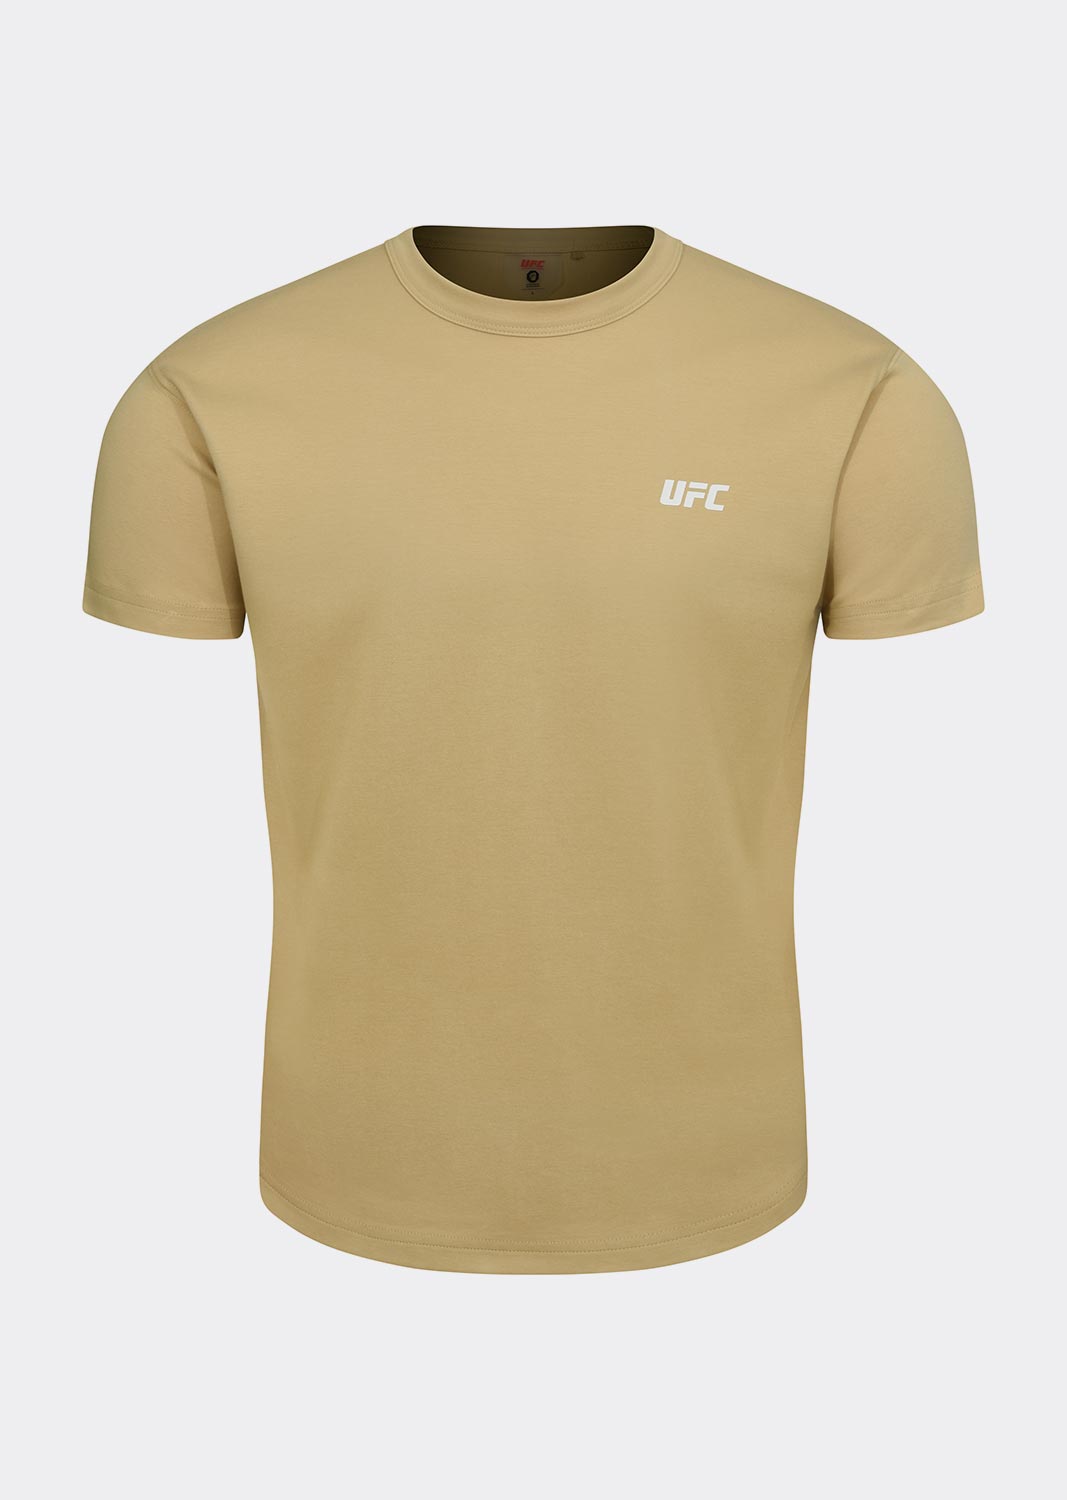 UFC 피지컬 레귤러핏 반팔 티셔츠 탄 U2SSV2132TN